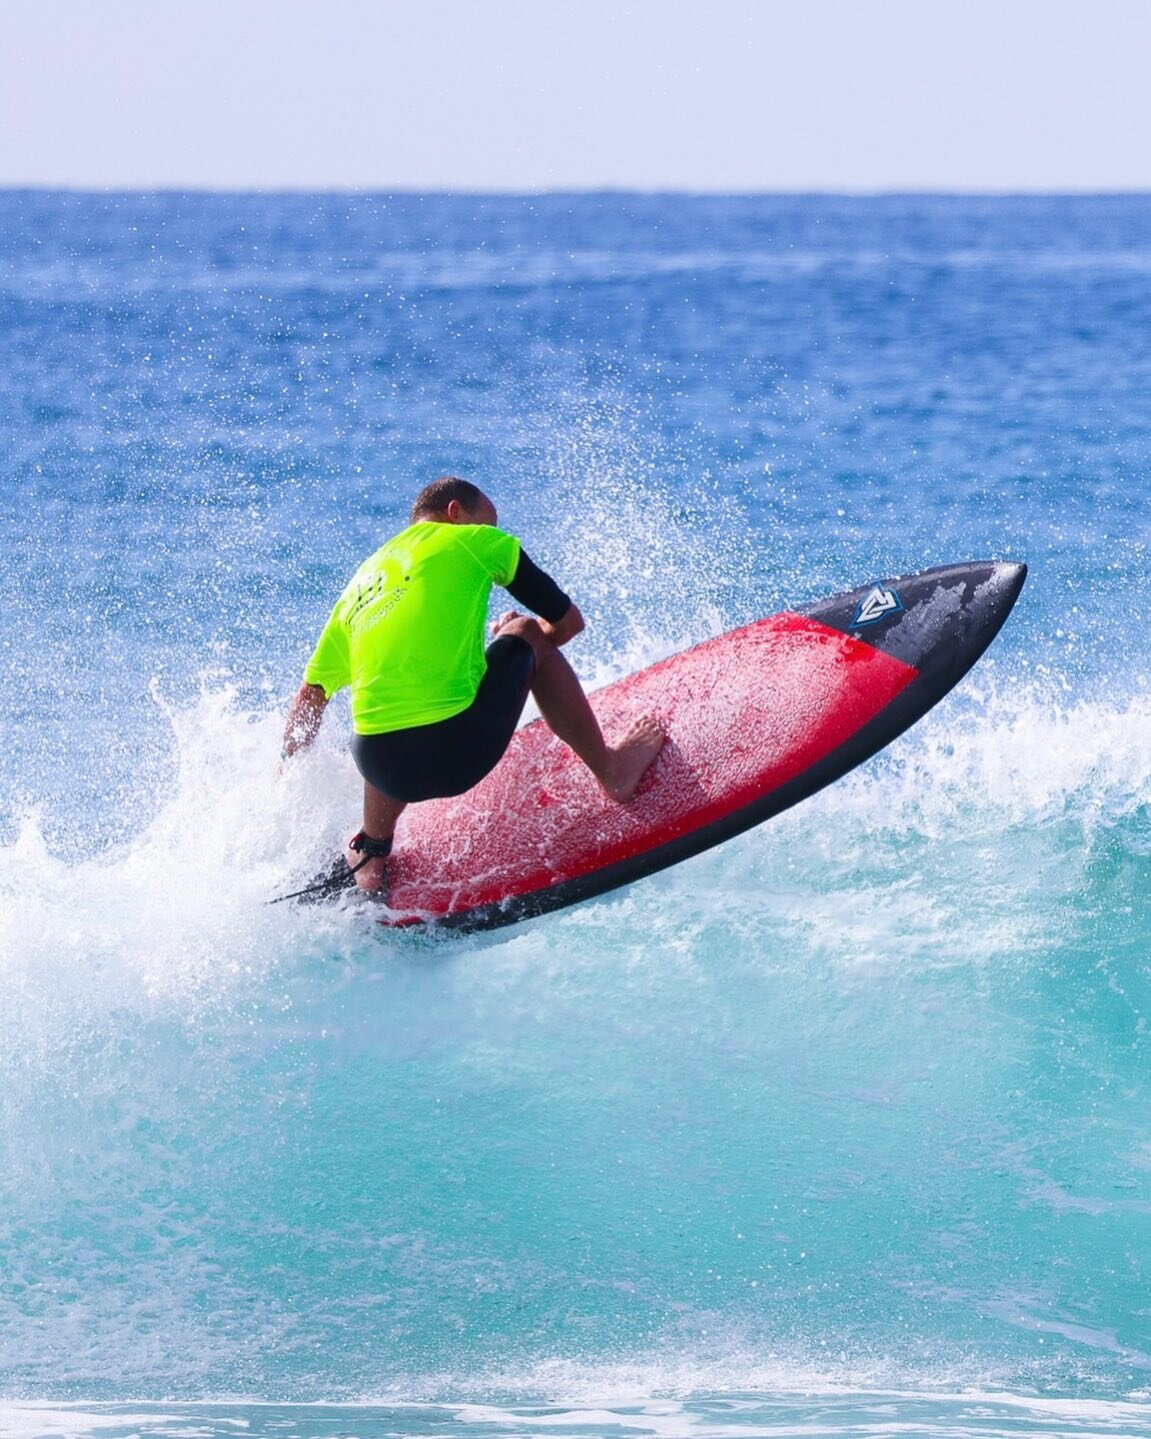 Shellharbour SUP Festival 2022. One of many amazing moments! 🙌🏼
.
.
.

#surfing #sydney #australia #supsurfing #videocontent #surfboards #videomarketing #canon #surfmedia #sunova #startboardsup #axisfoil #surfingnsw #surfingaustralia #surfingqld #f